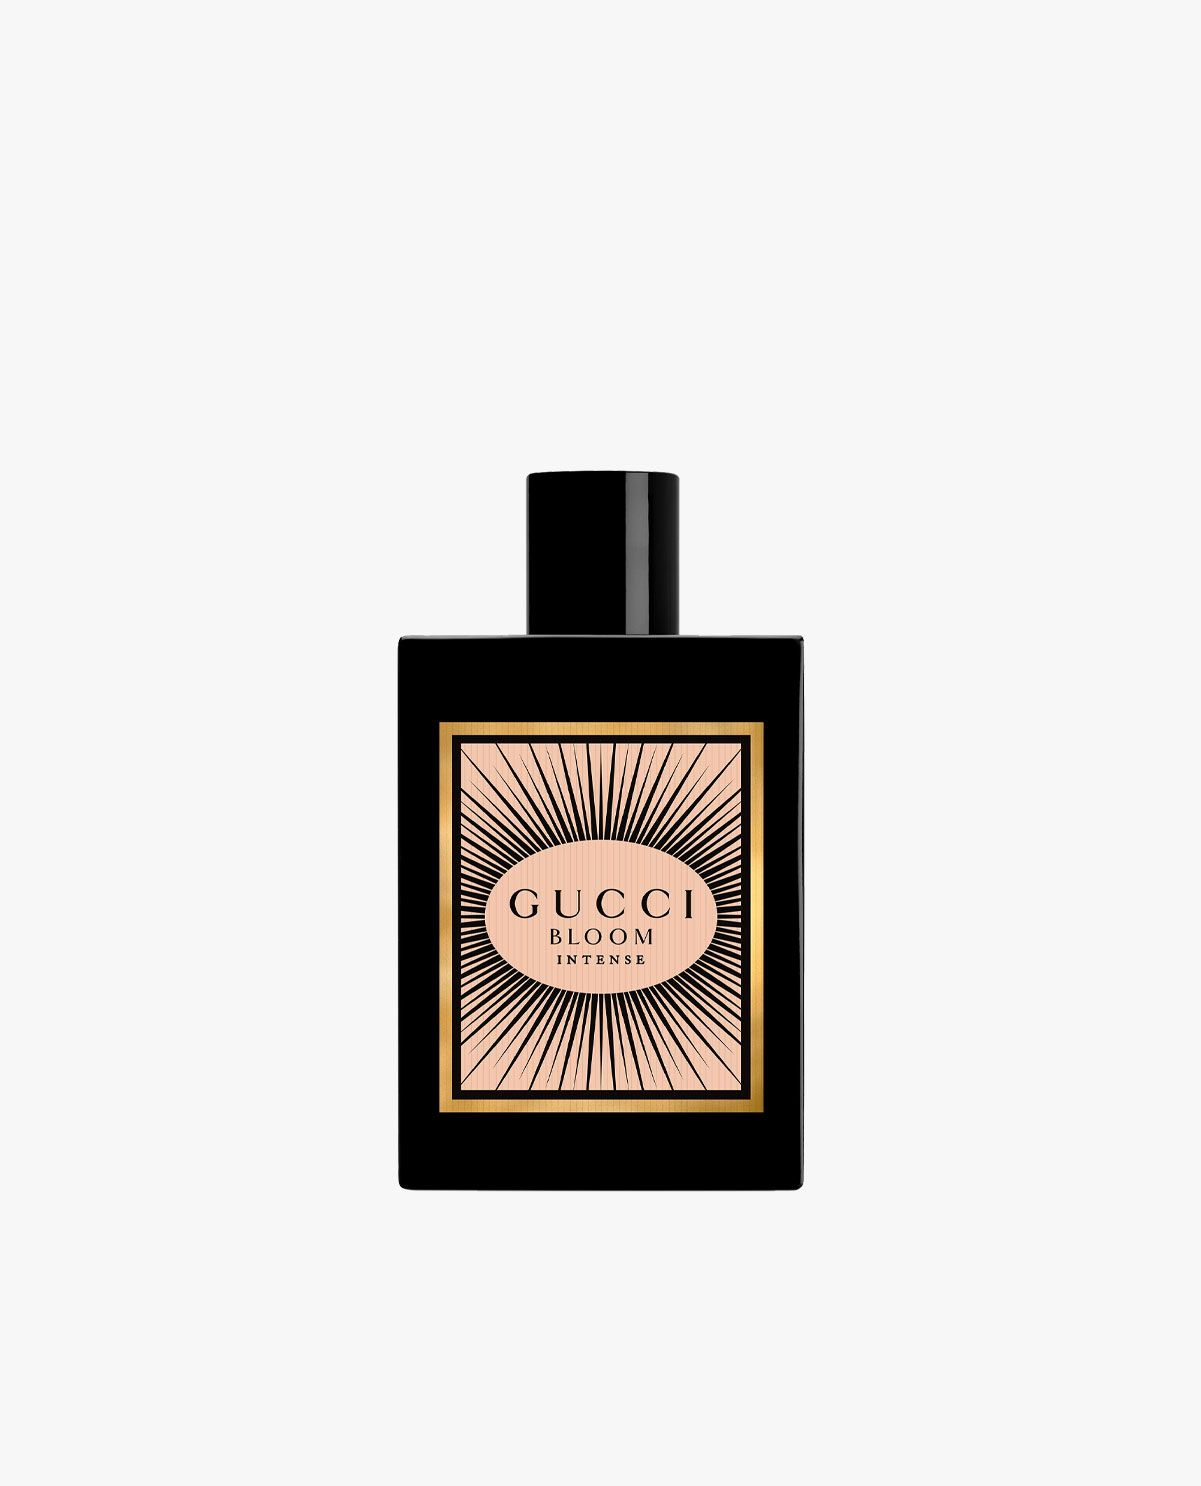 Gucci Bloom Intense - 10ml